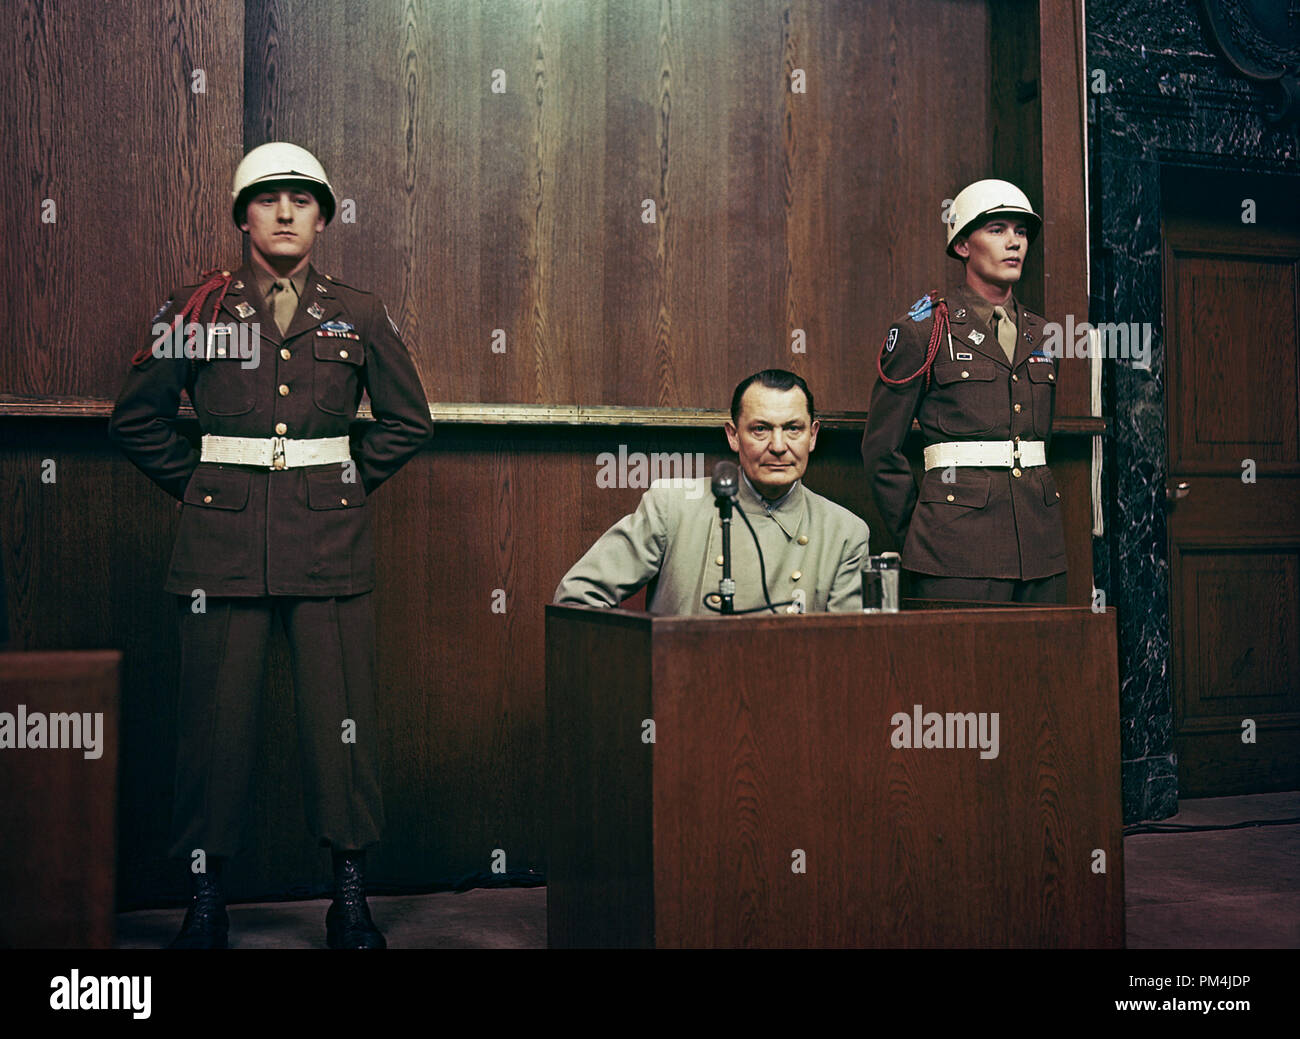 Hermann Goering at Nuremberg Trial, Nuremberg, Germany, 1946   File Reference # 1003_682THA Stock Photo